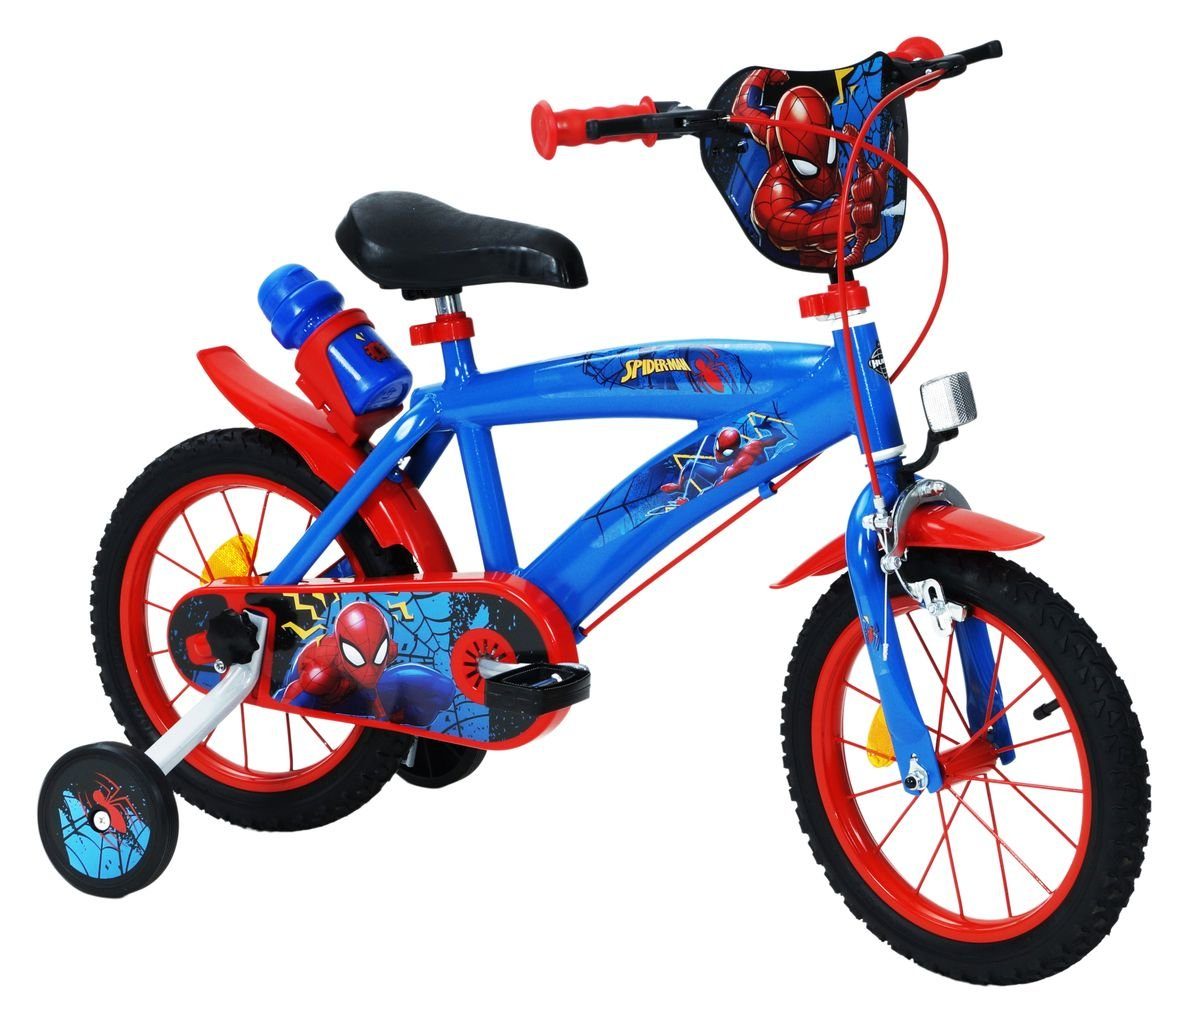 Huffy Kinderfahrrad 14 Zoll Kinder Fahrrad Rad Bike Disney Spiderman Marvel Huffy 24941, 1 Gang, Stützräder, Trinkflasche